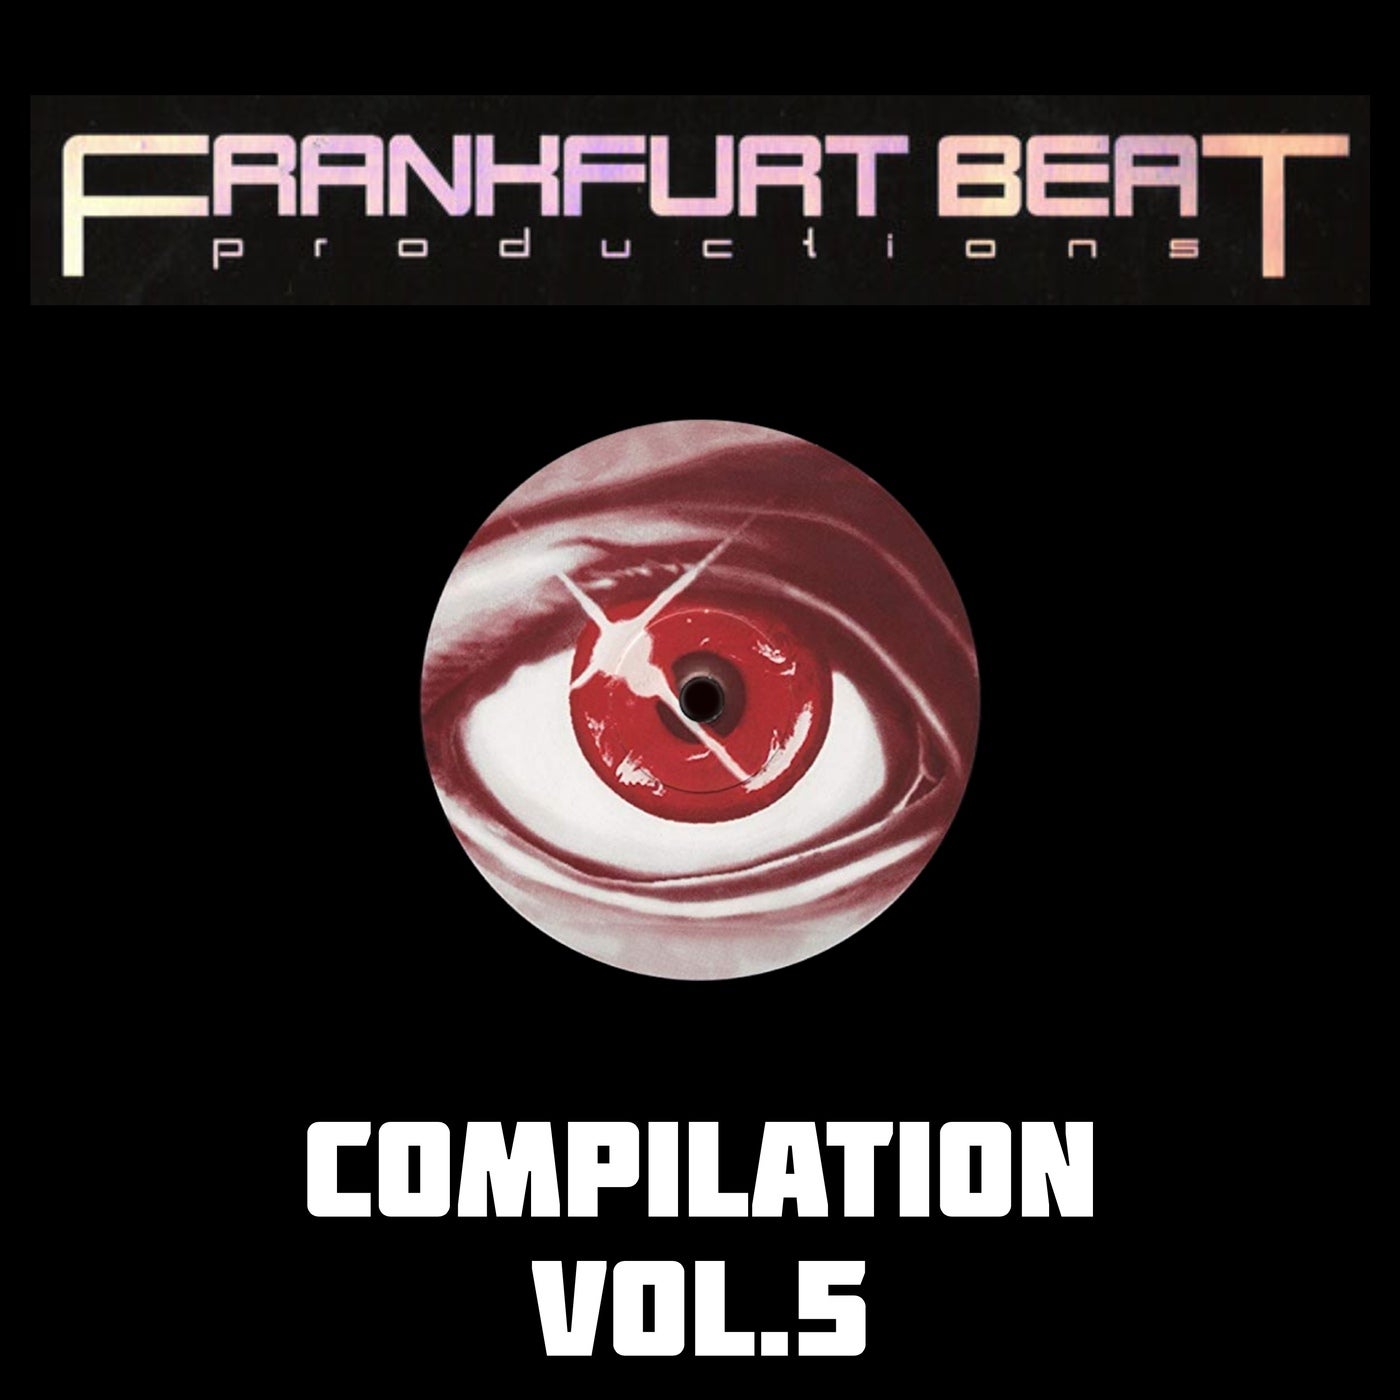 Frankfurt Beat Compilation, Vol.5